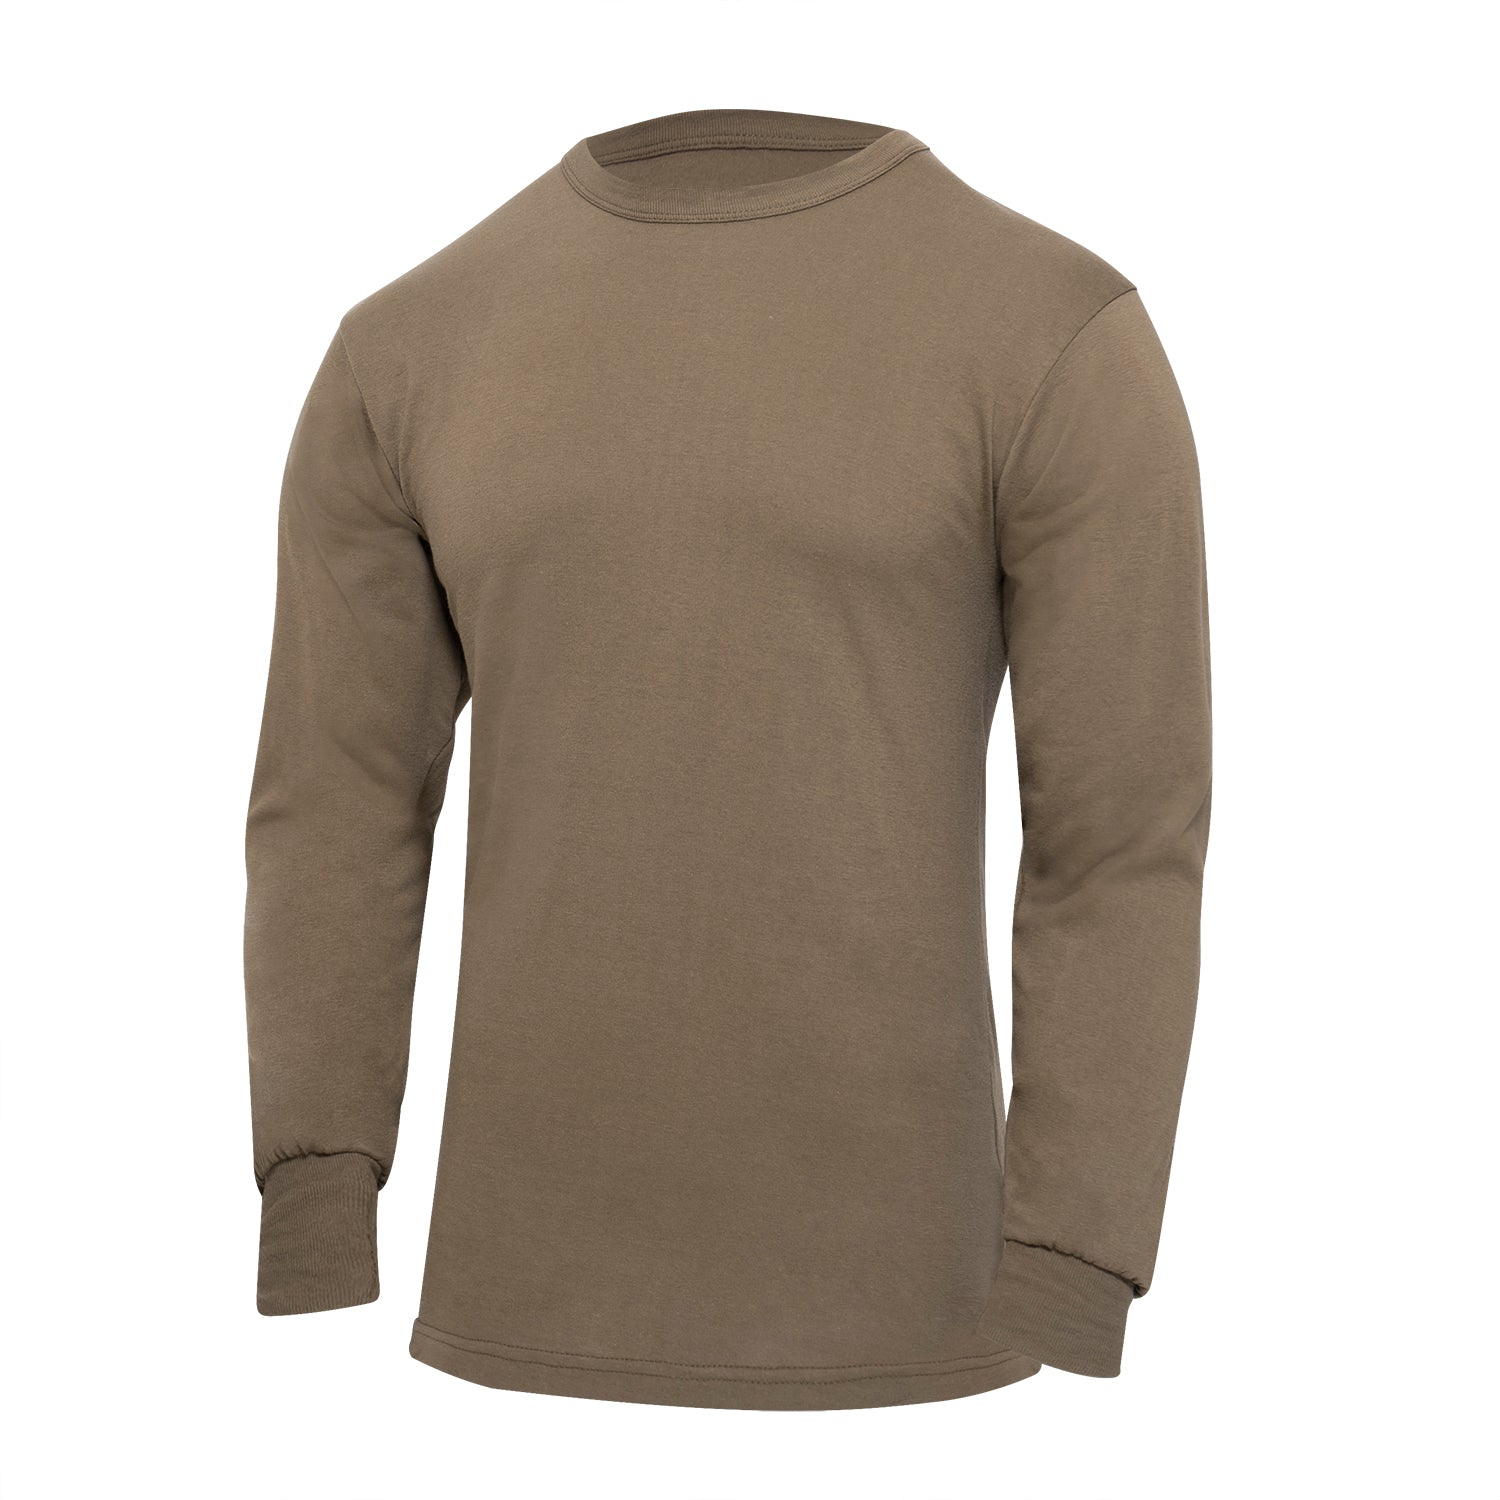 [AR 670-1][Military] Poly/Cotton Long Sleeve Shirts